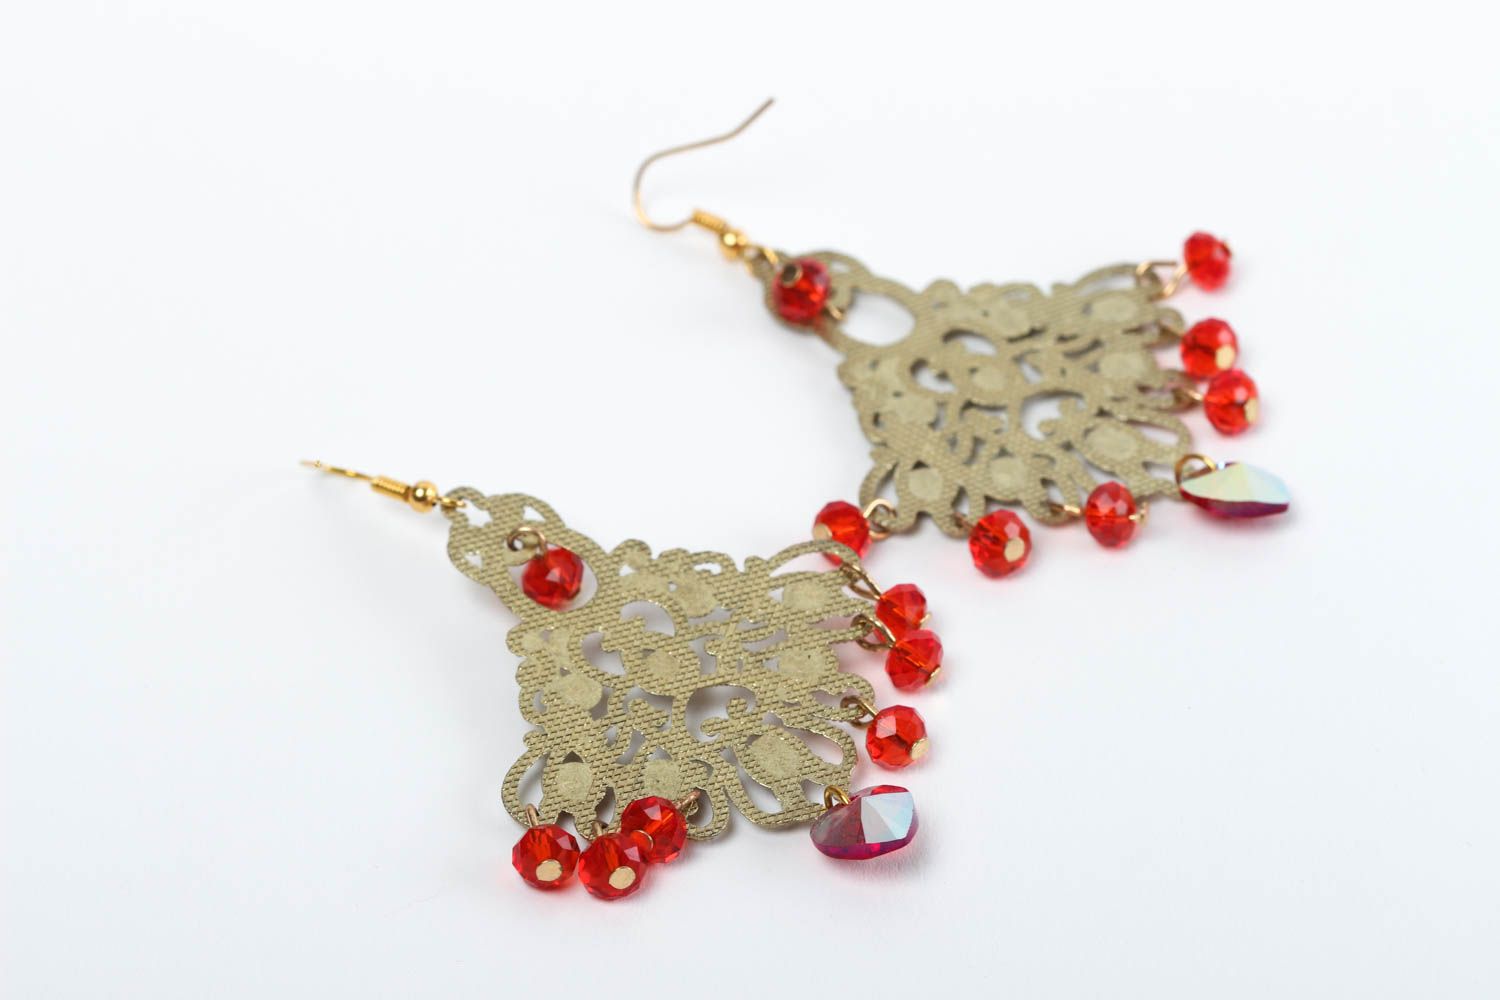 Handmade earrings designer earrings unusual gift elite jewelry gift ideas photo 4